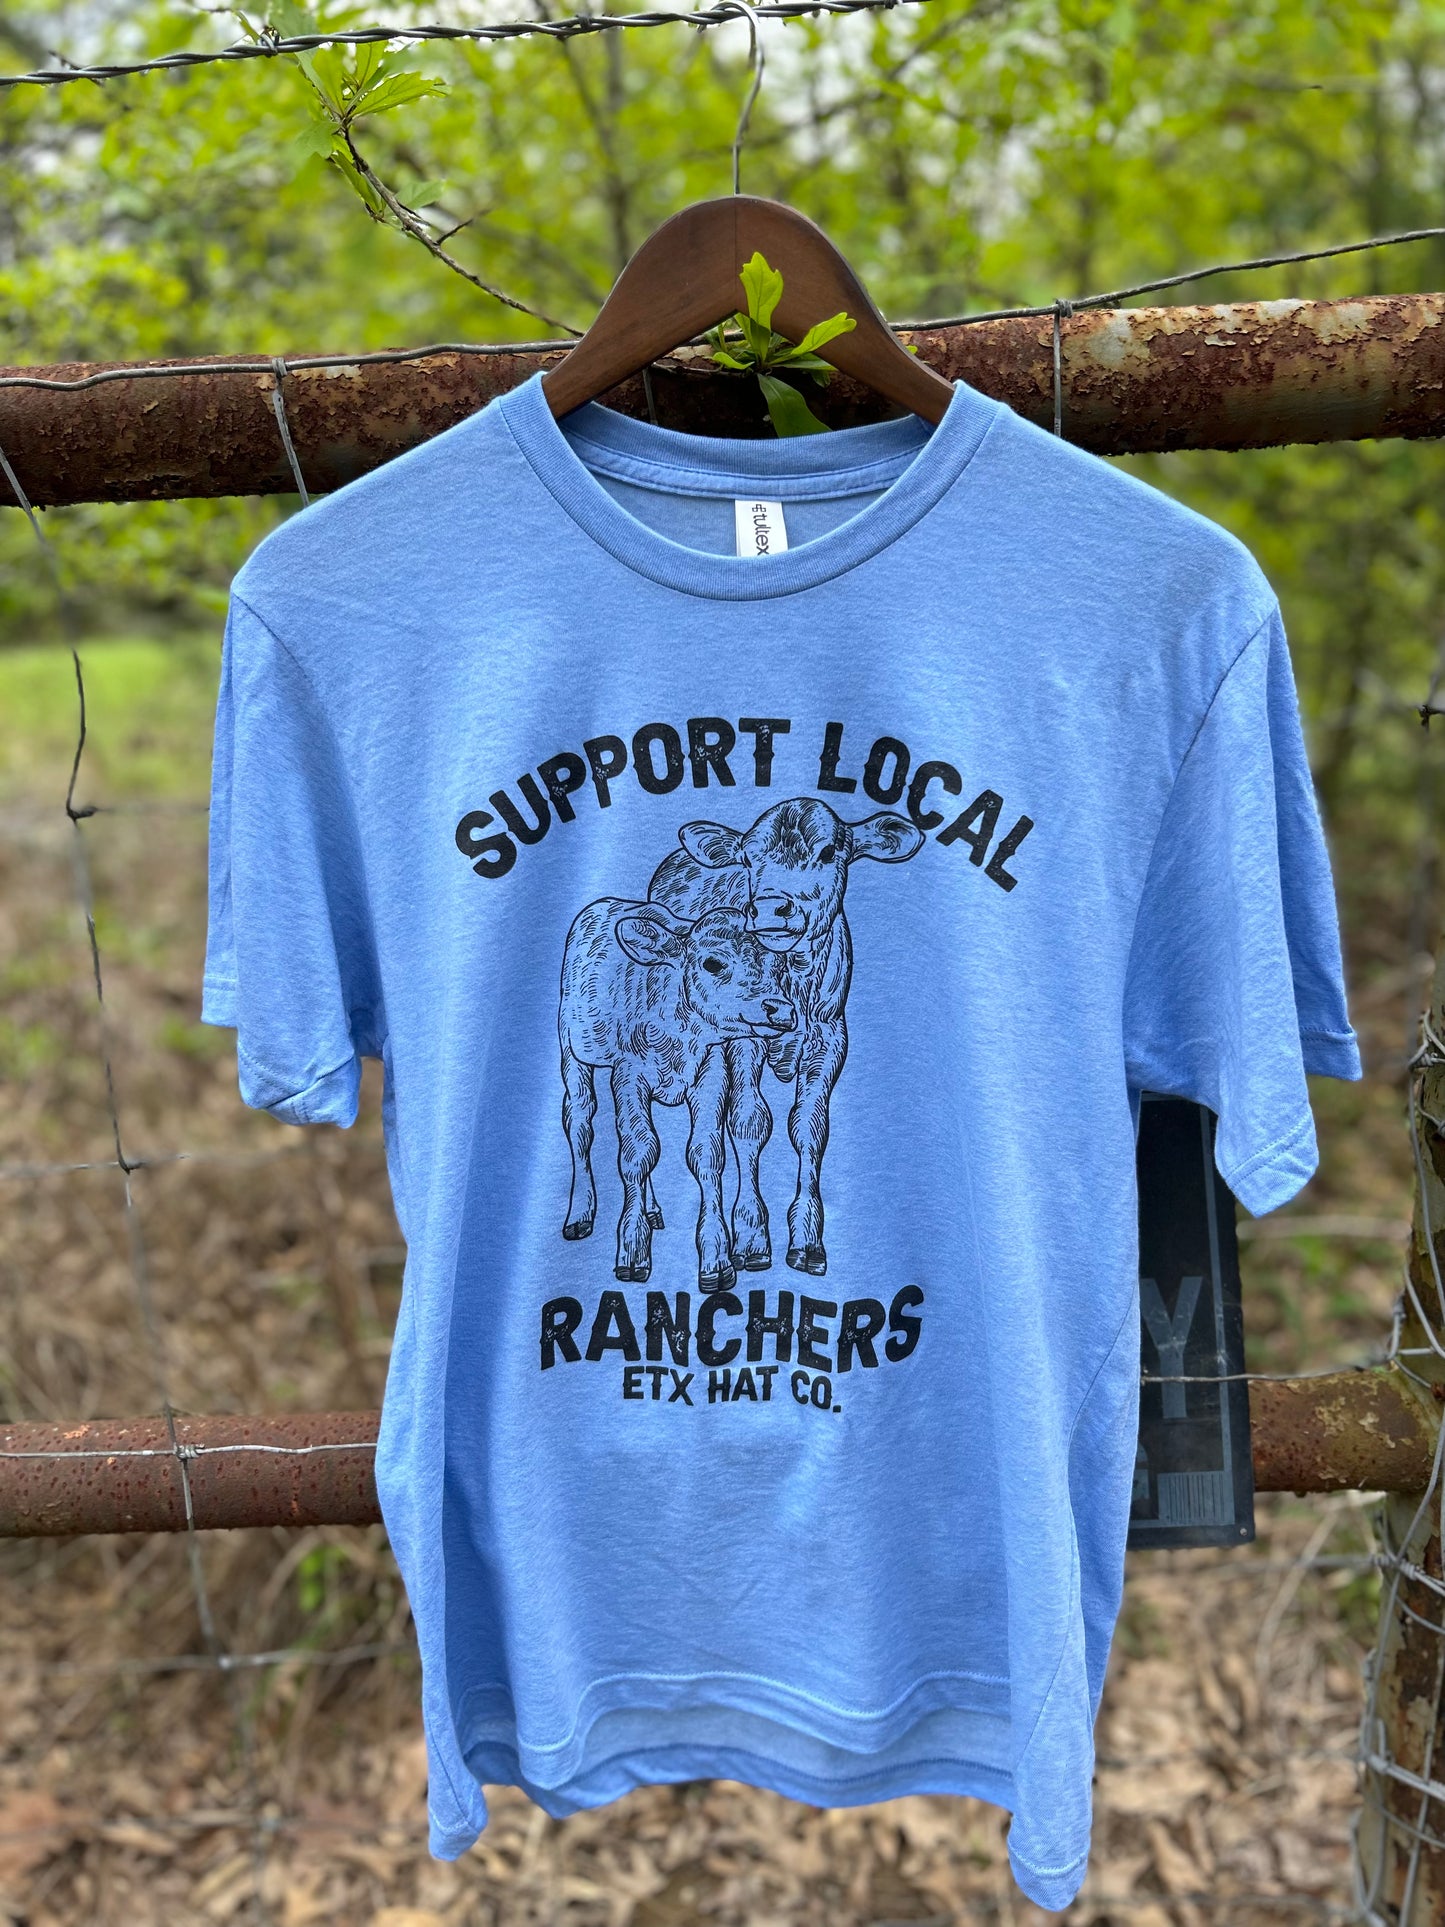 Support Local Ranchers - Short Sleeve Shirt